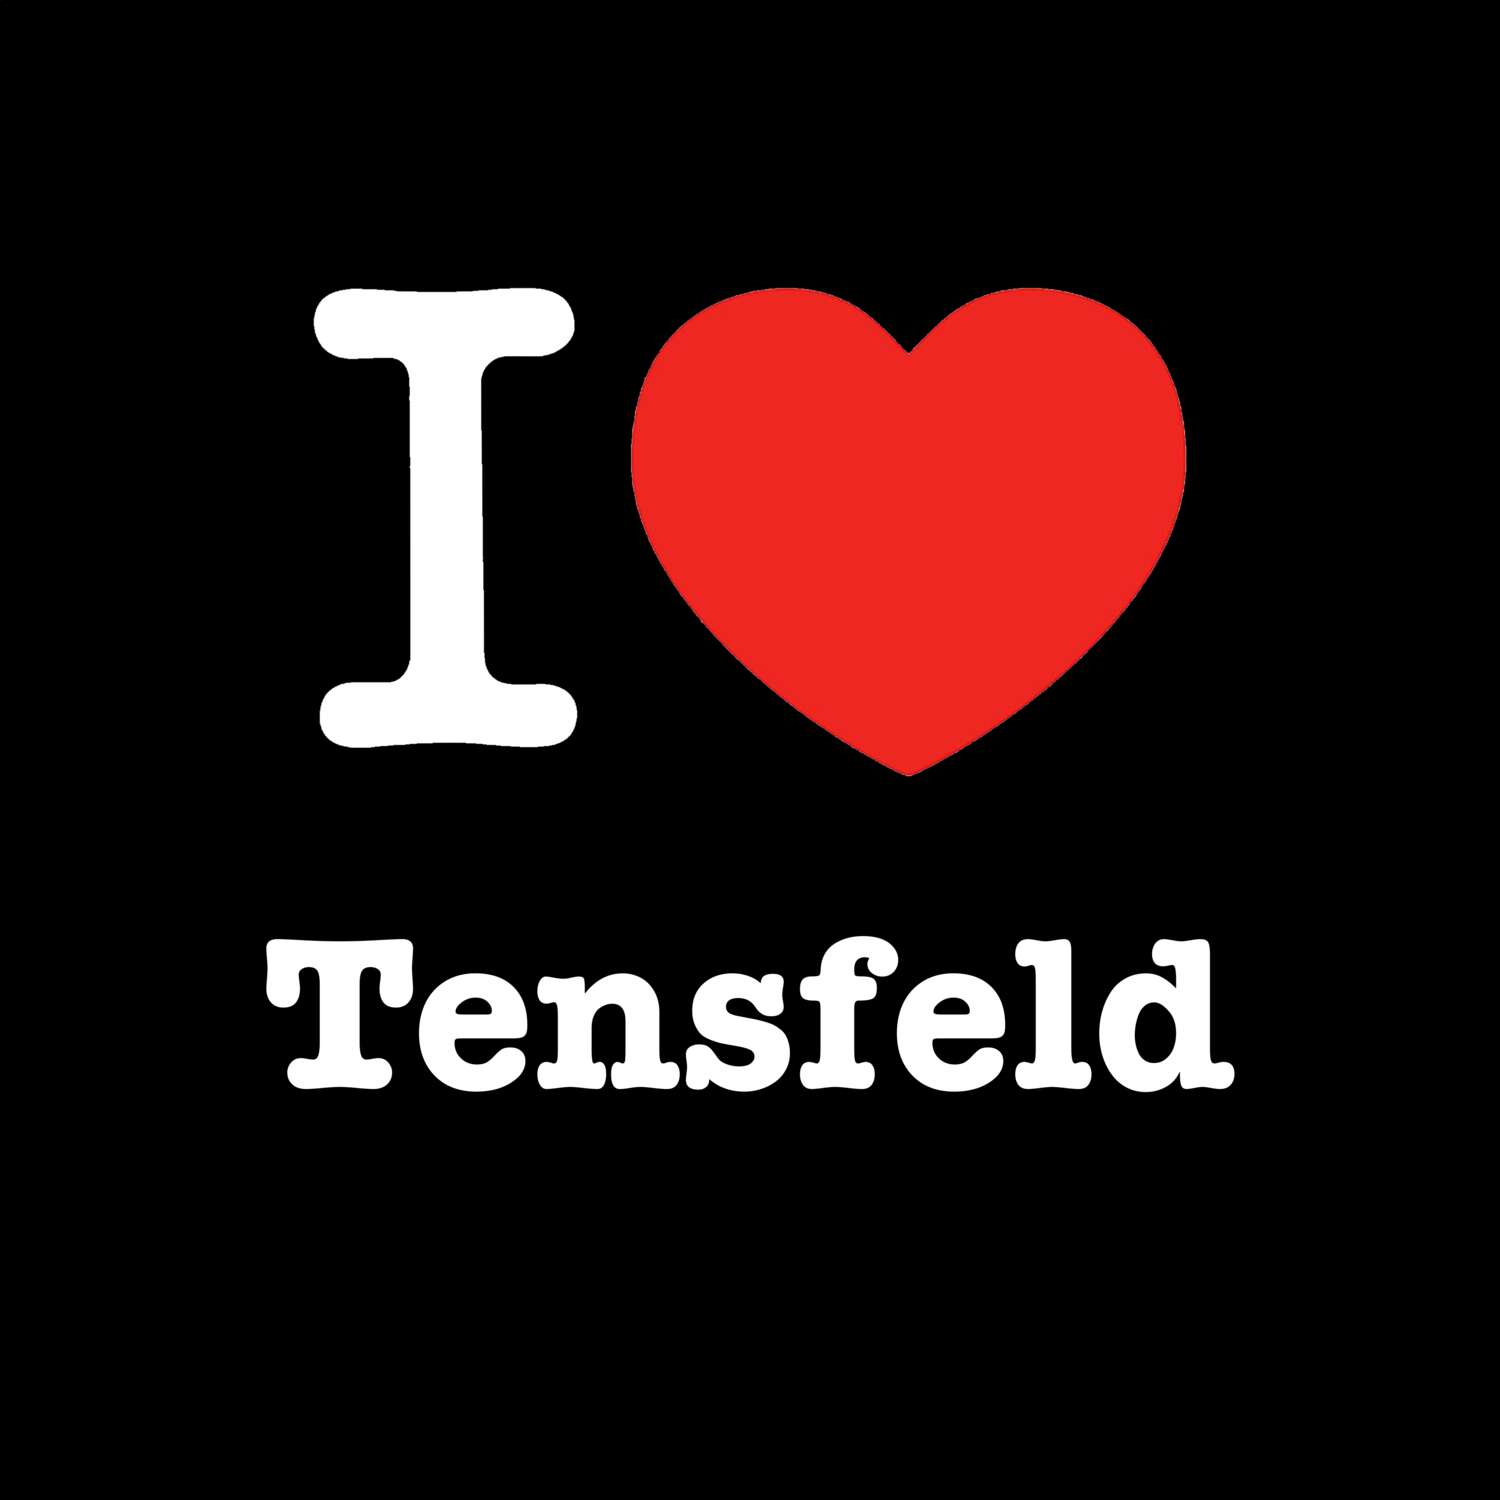 Tensfeld T-Shirt »I love«